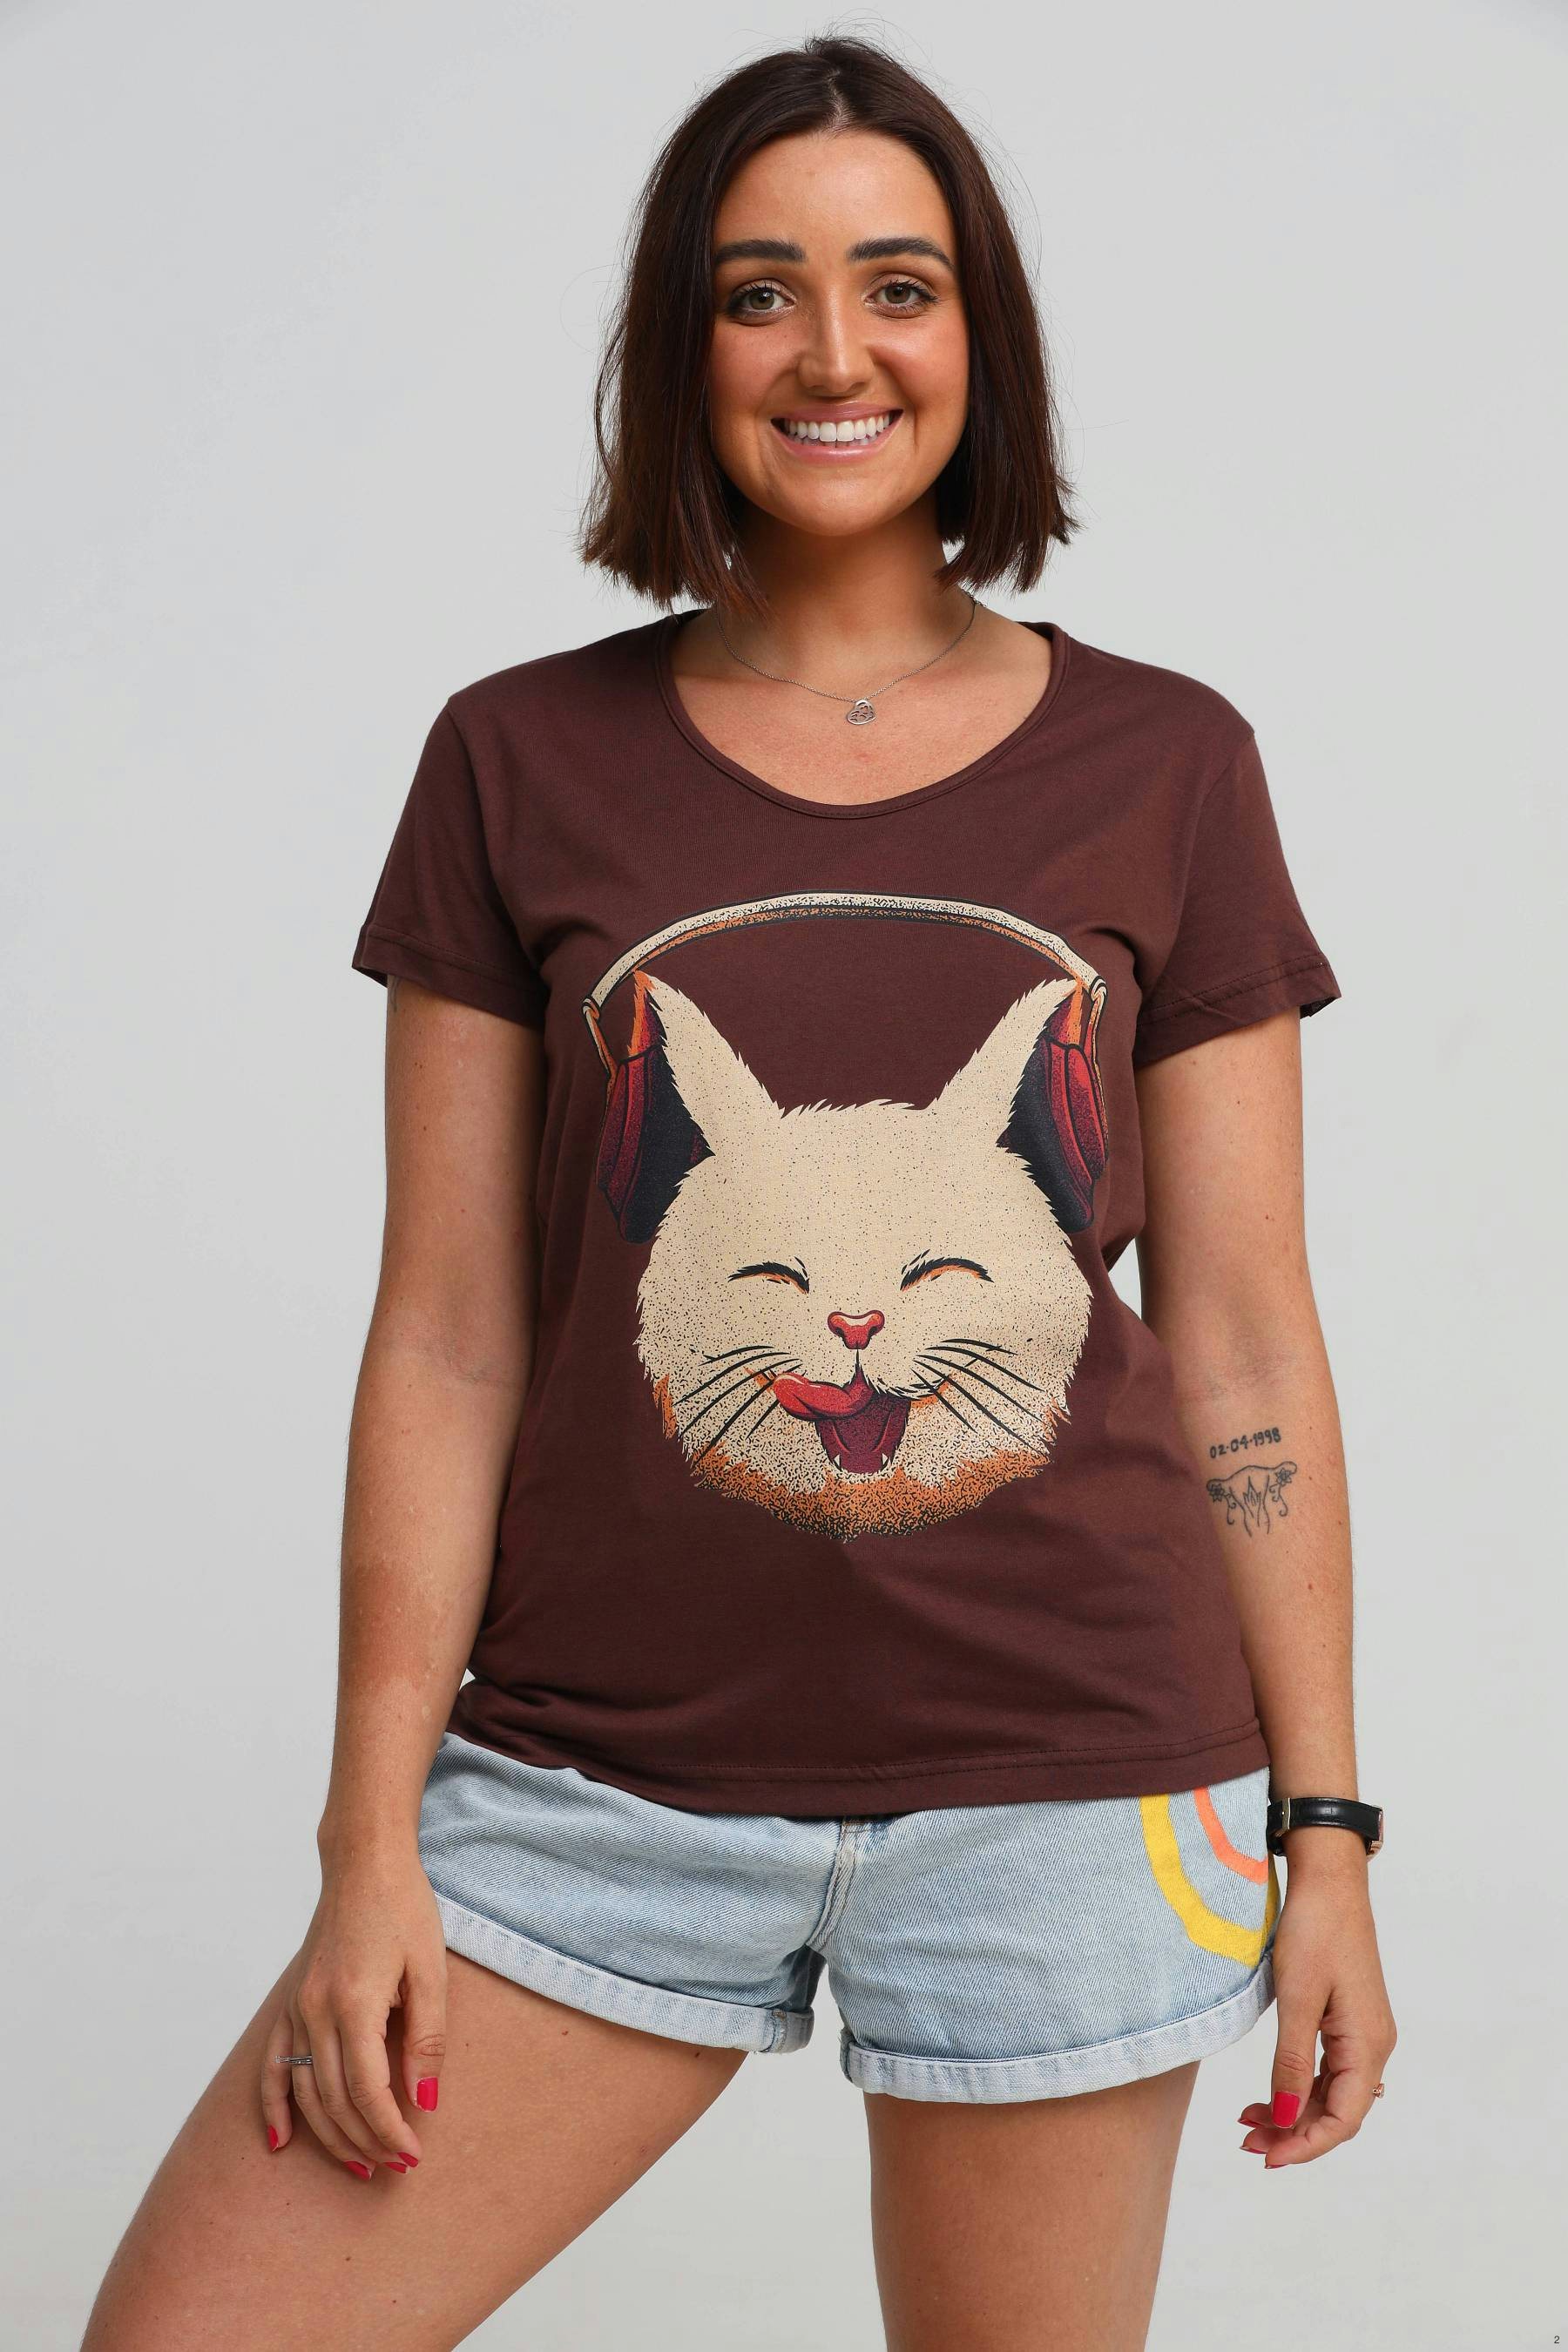 Camiseta Smiling Musical Cat - Tobe Fonseca na Chico Rei - Chico Rei